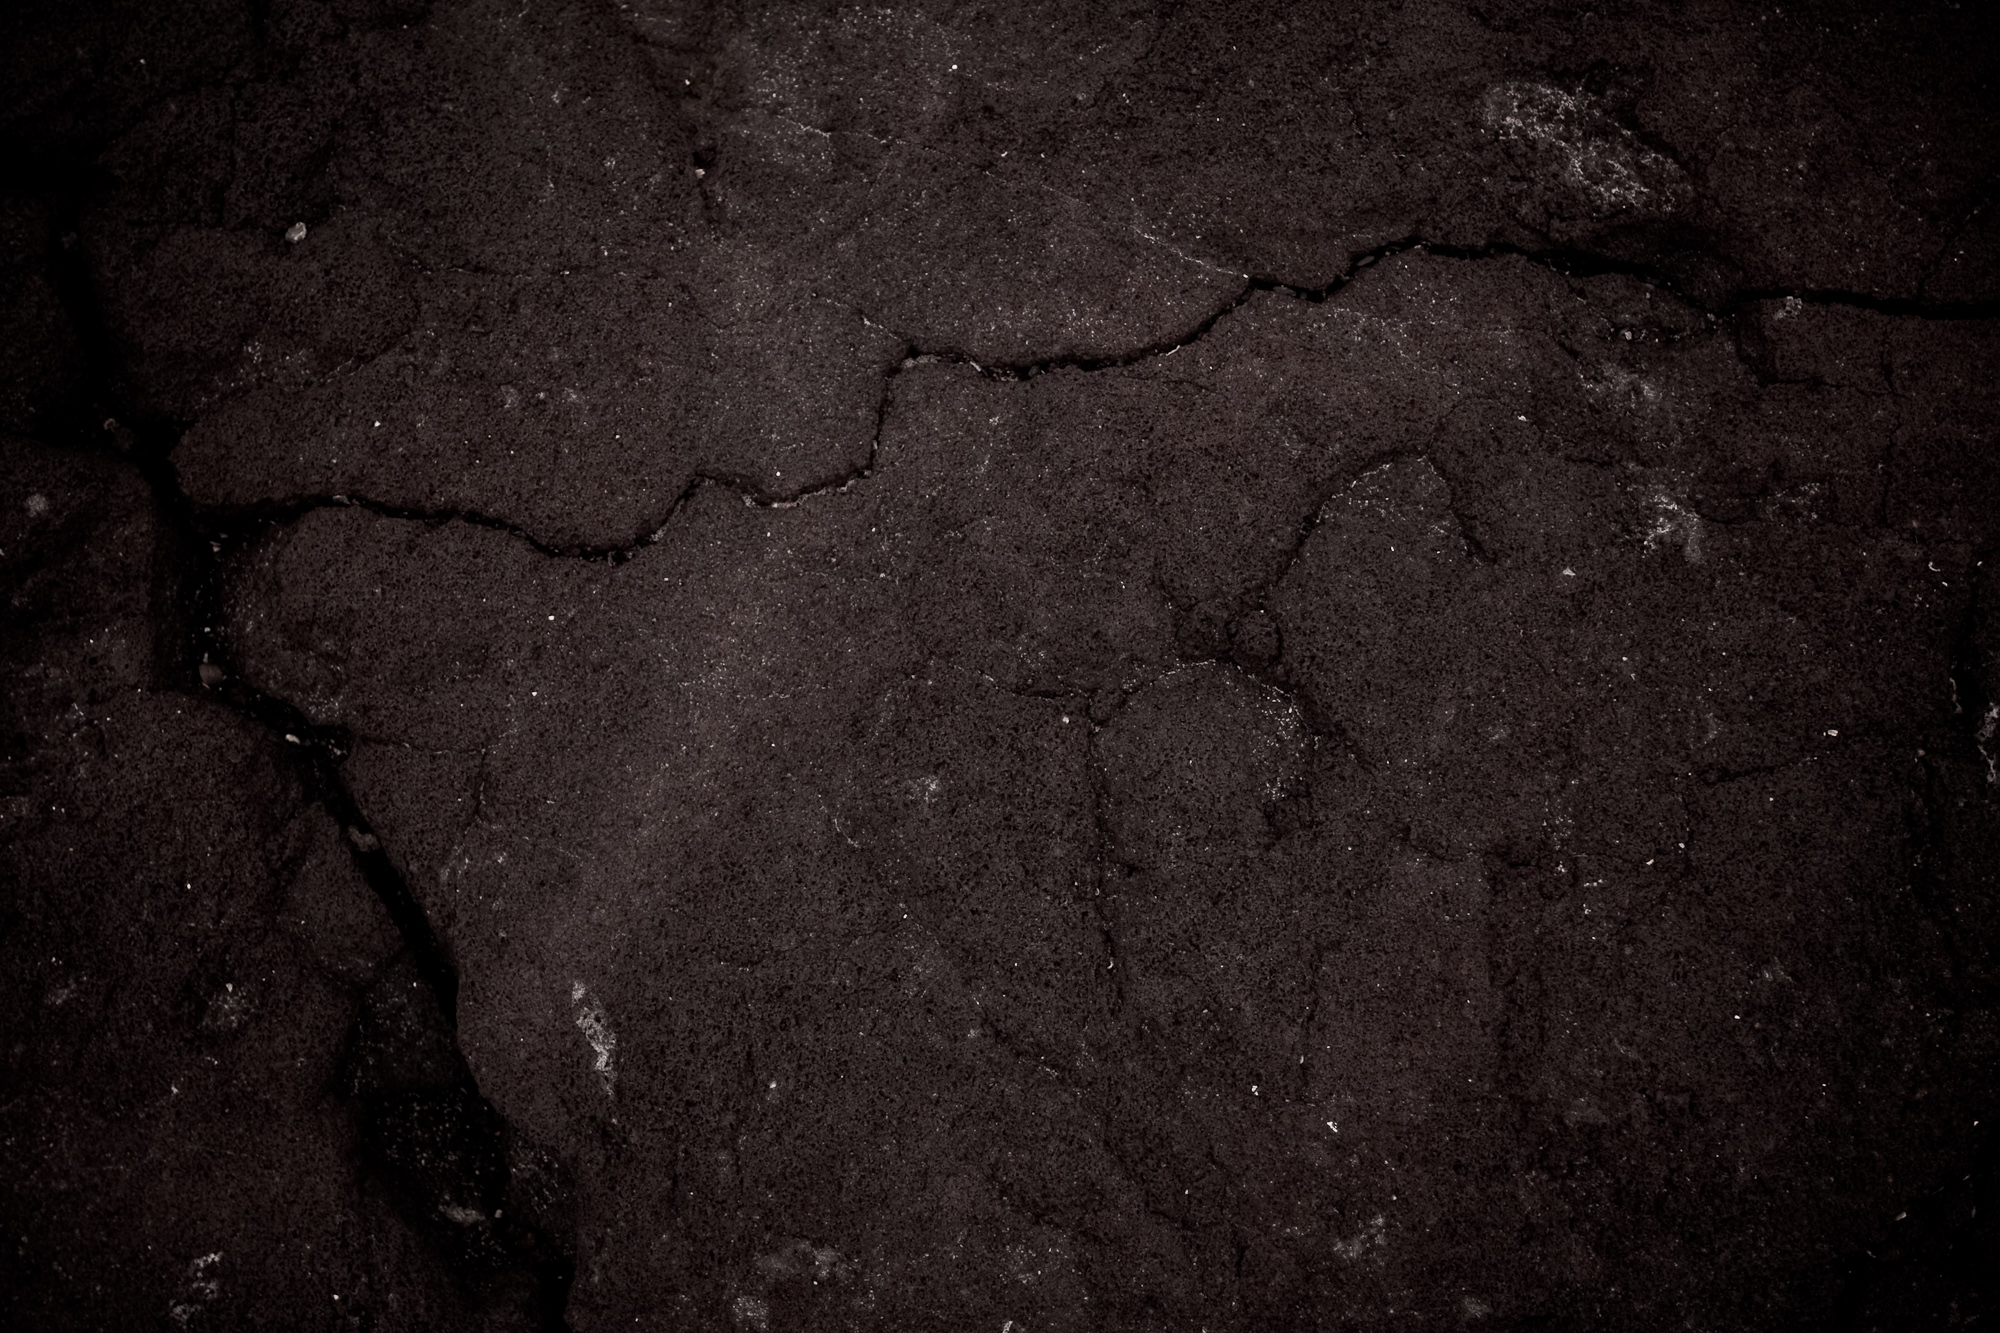 Cracked rock texture photo